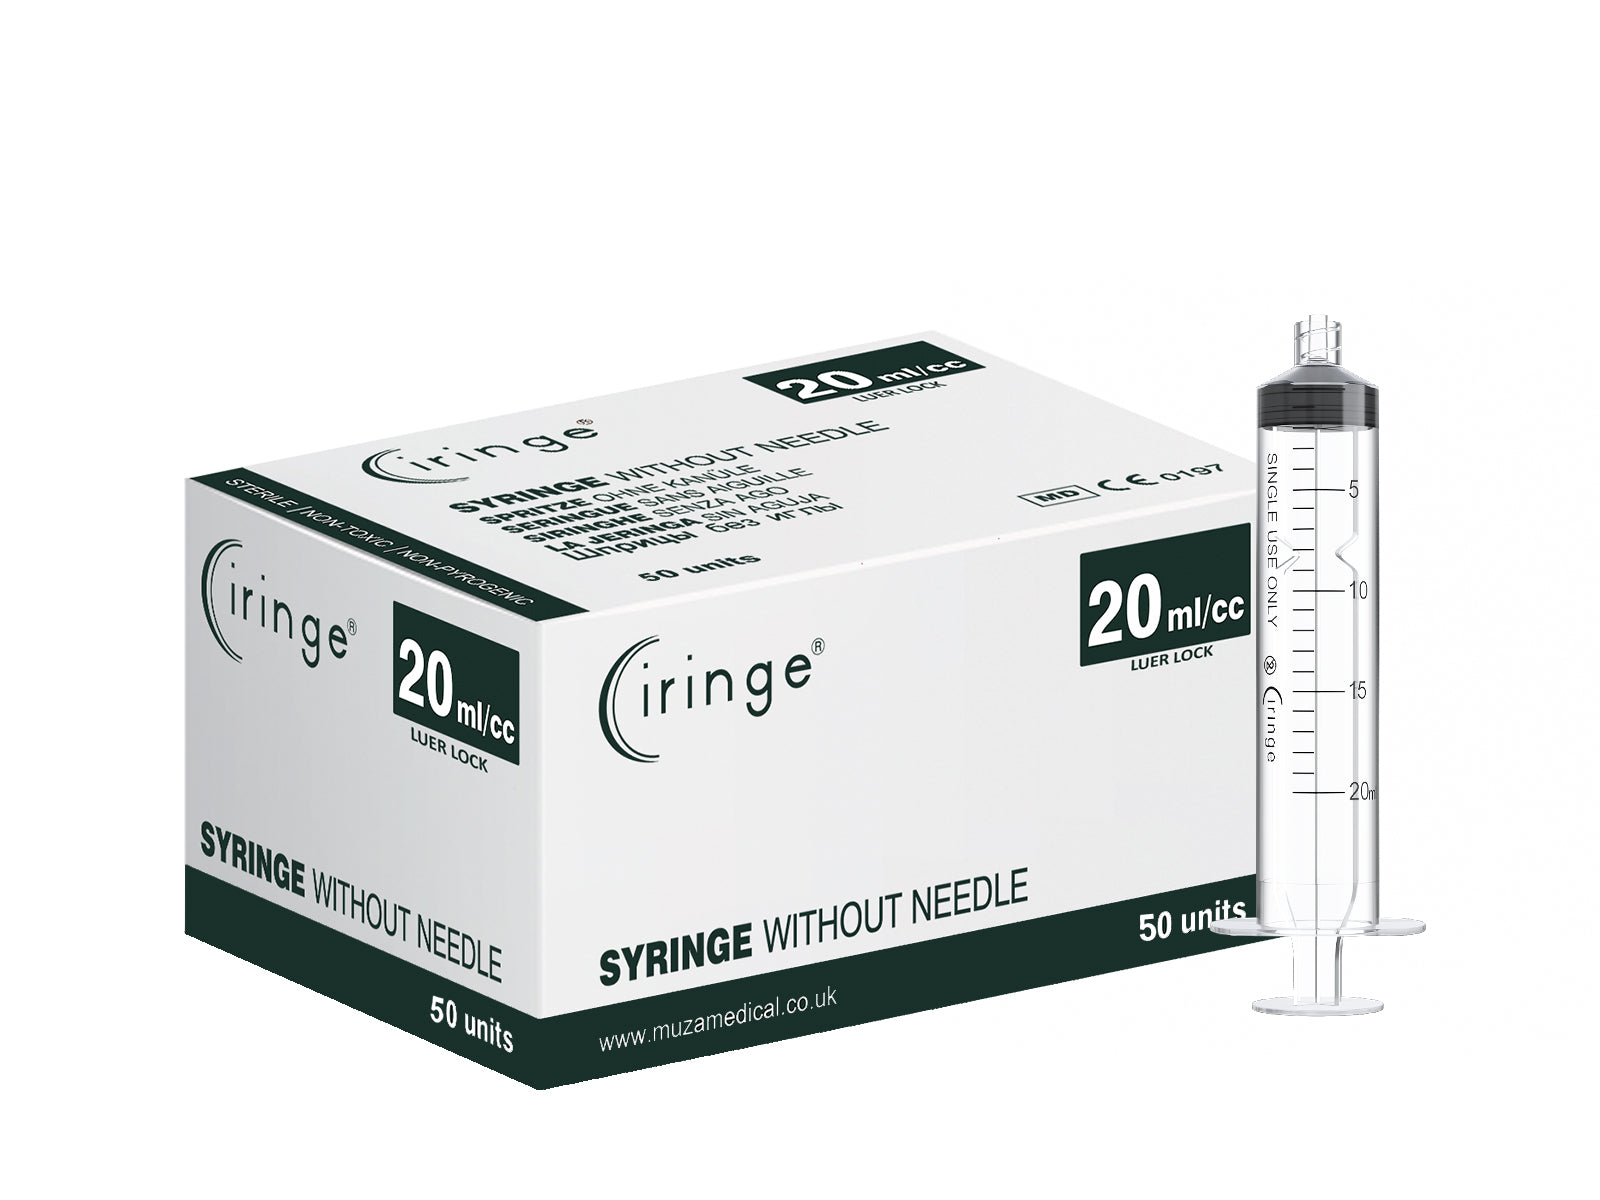 Ciringe Disposable Syringes